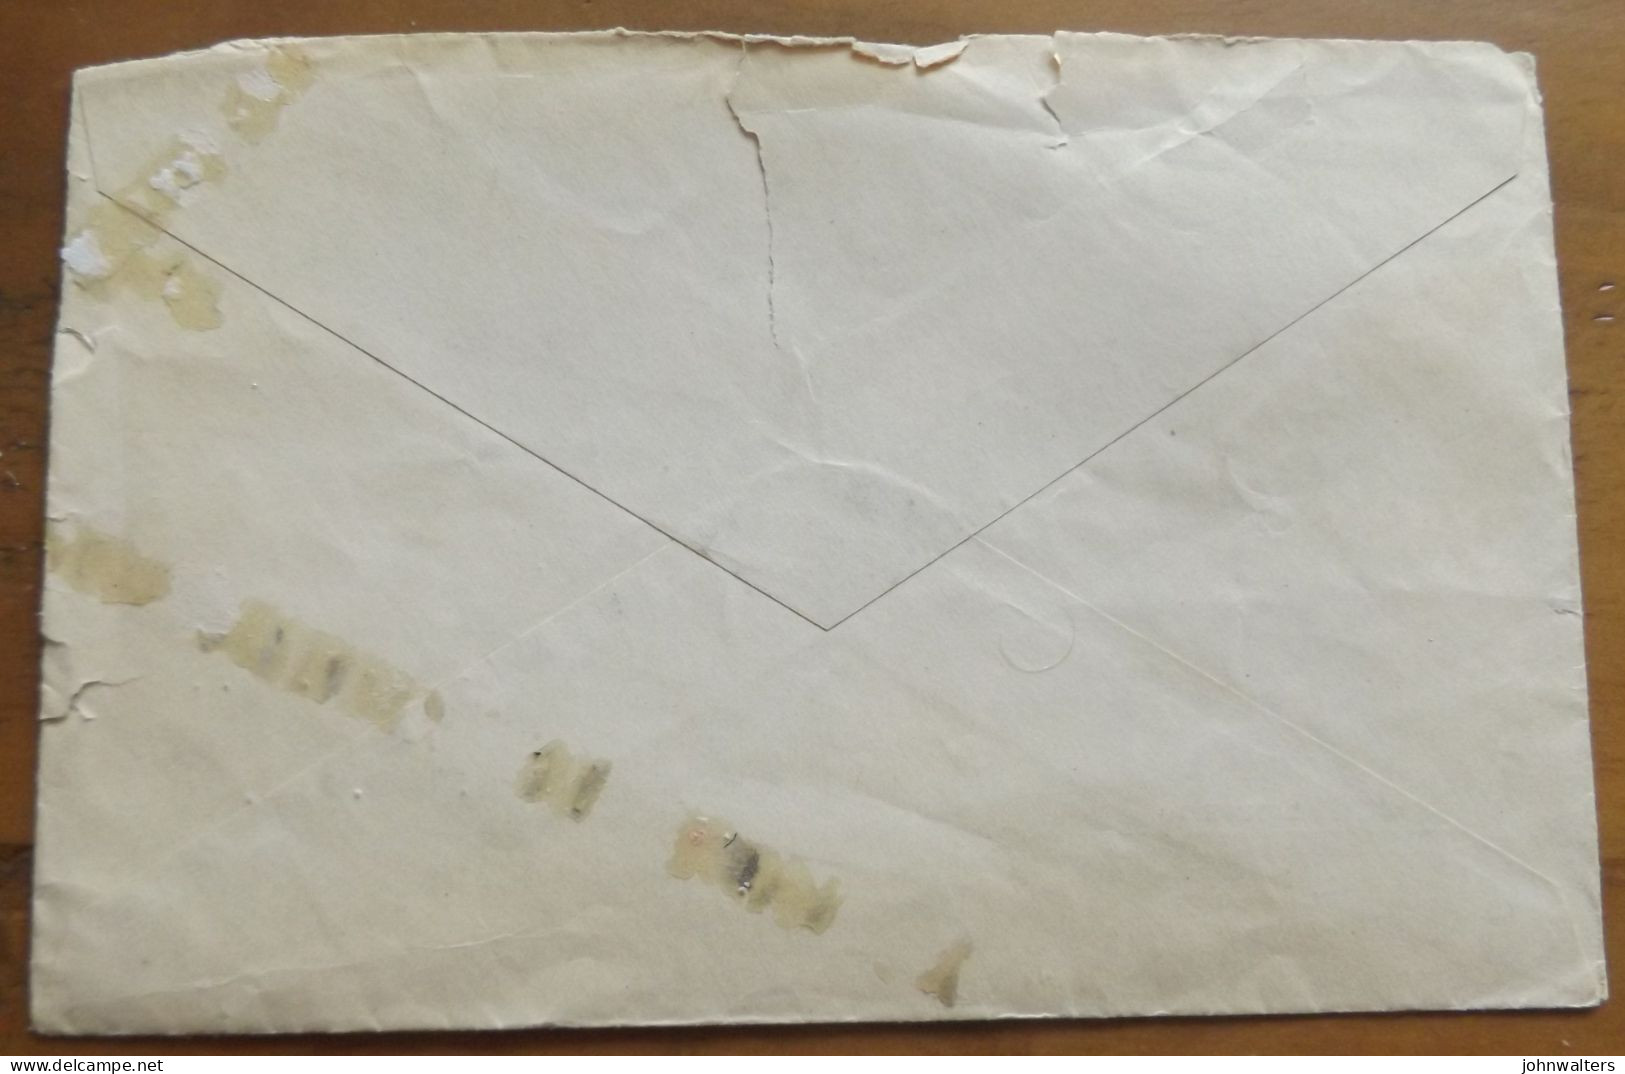 Muruzen Company Tokyo Japan 1915 Stamped Envelope Containing Memorandum To American Cutler Brooklyn N.Y USA - Storia Postale